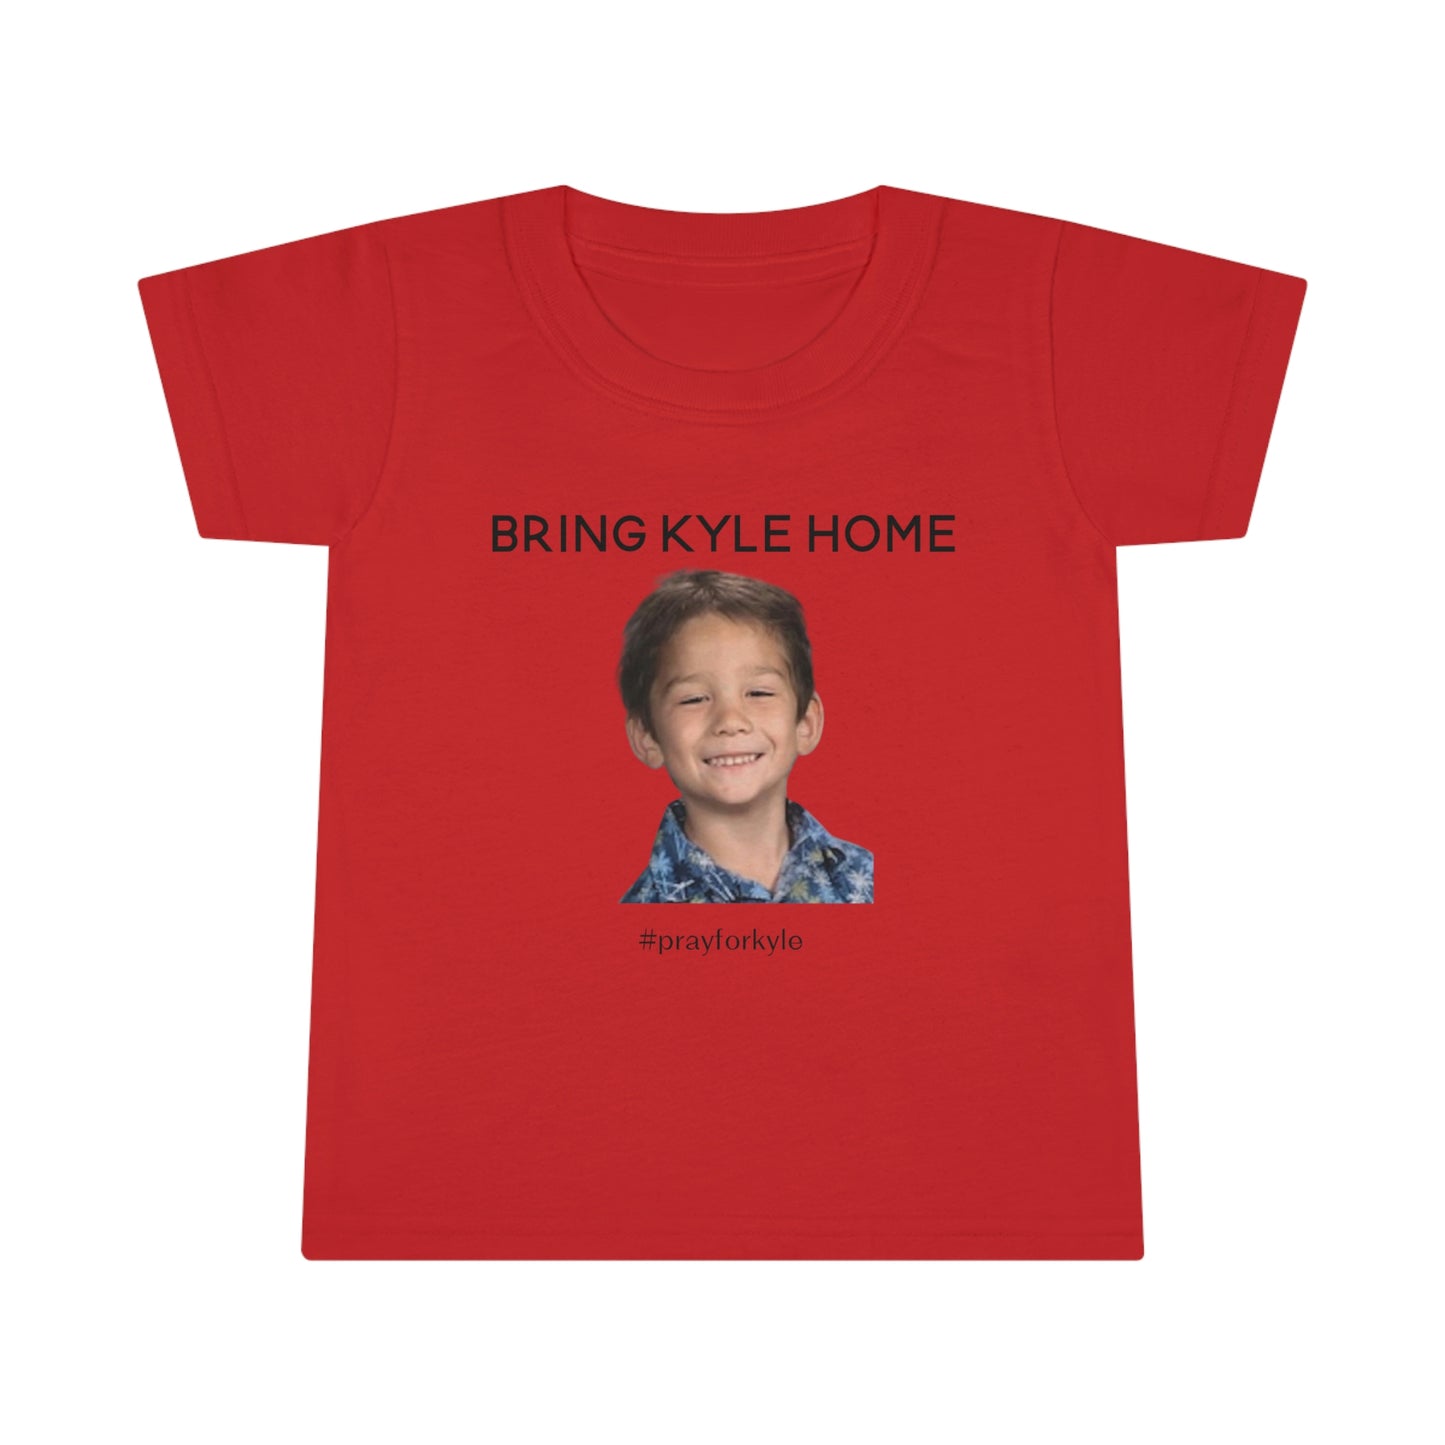 Toddler Bring Kyle Home T-shirt